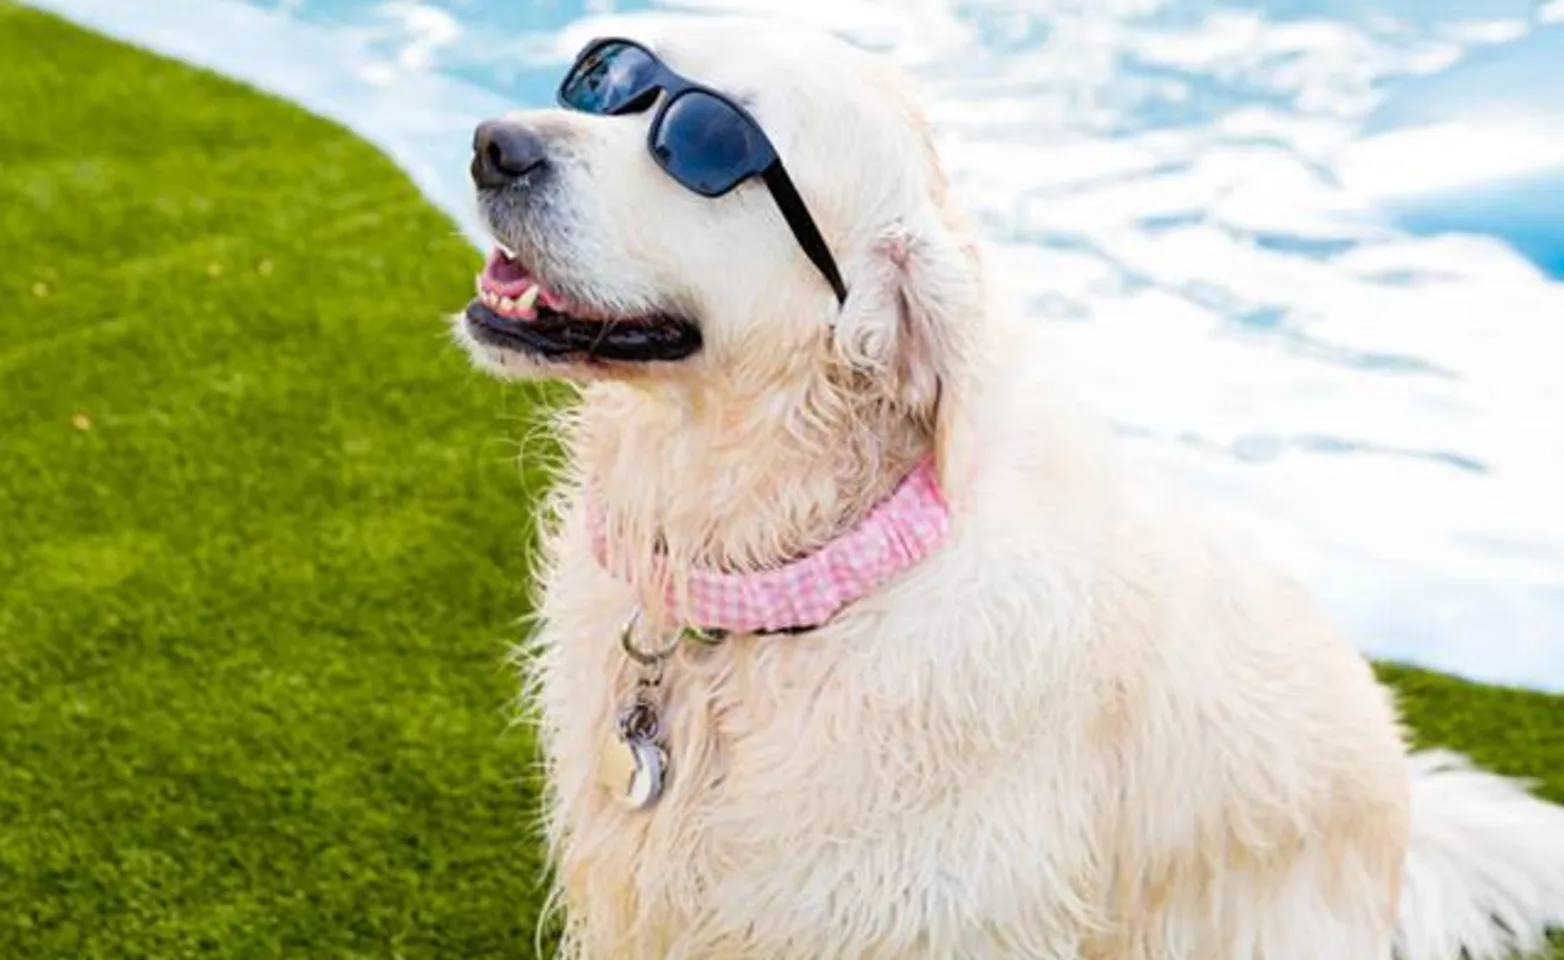 Island Animal Hospital Dog with sunglasses